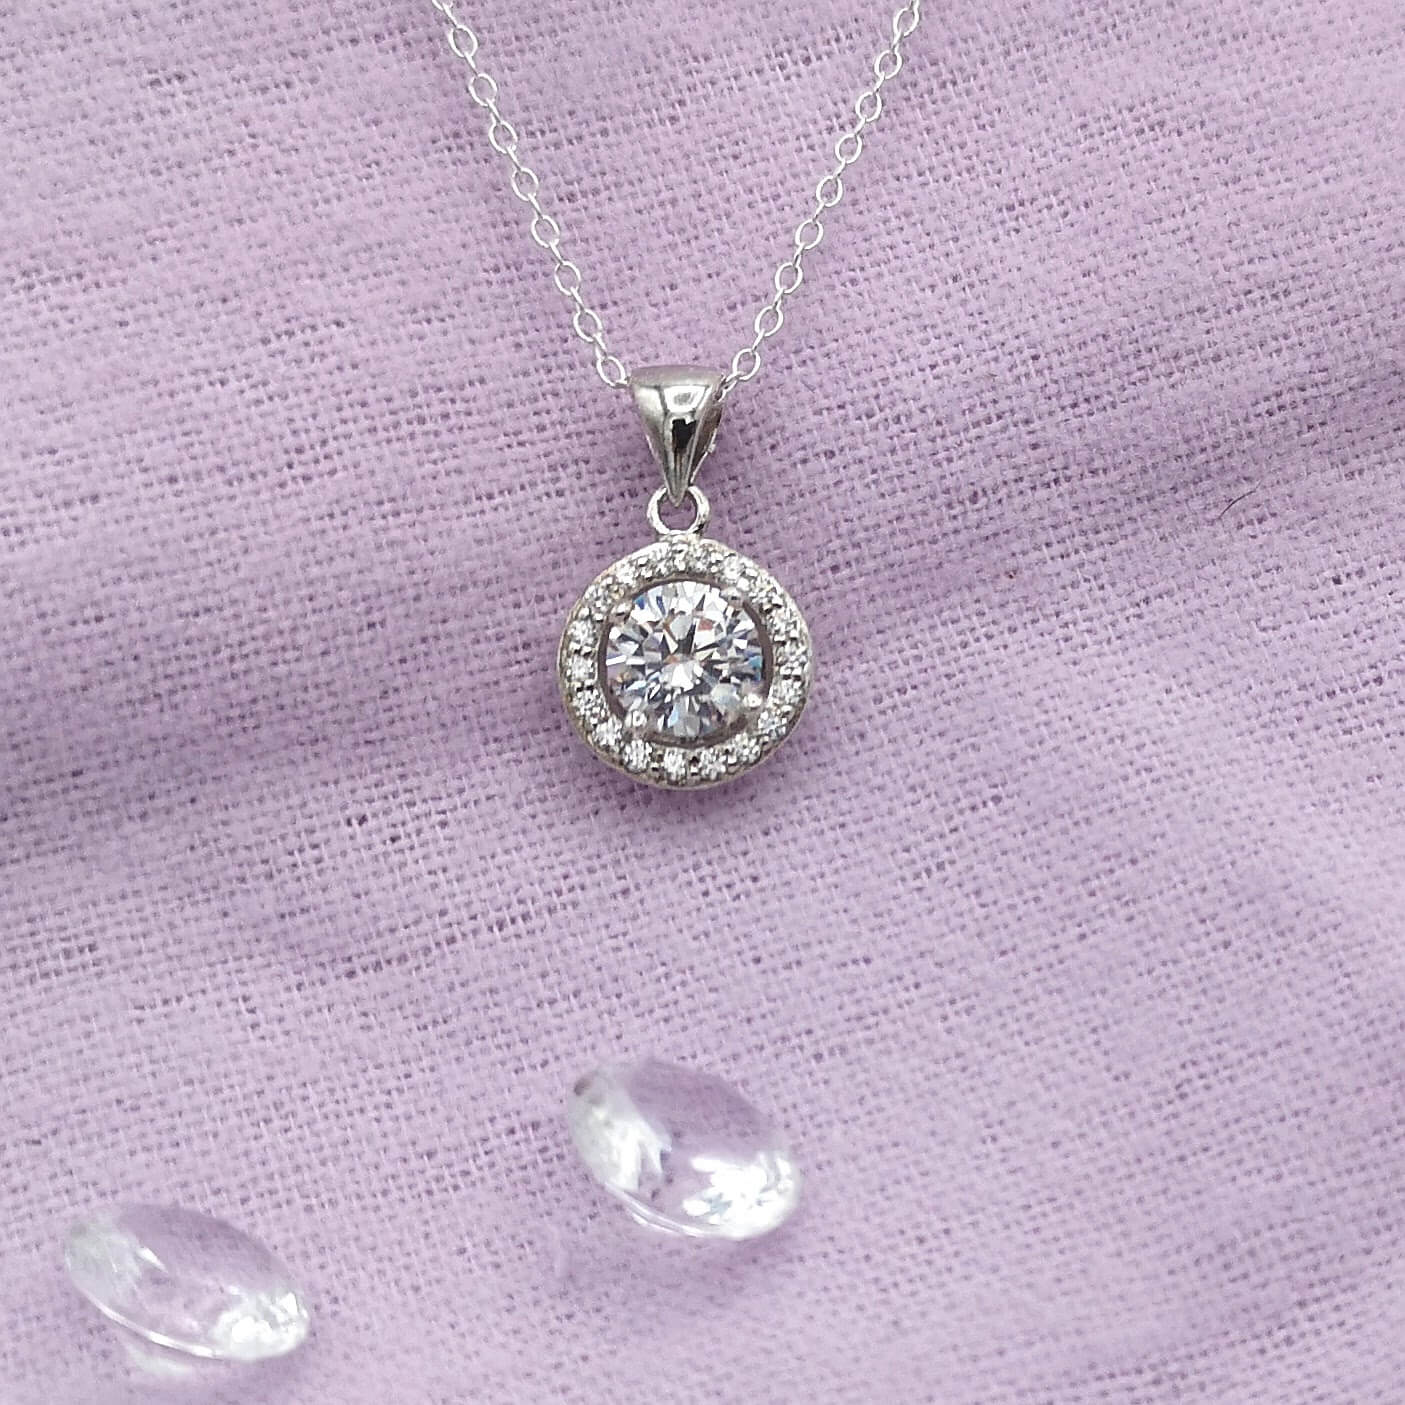 White gold and diamond halo necklace on a purple napkin